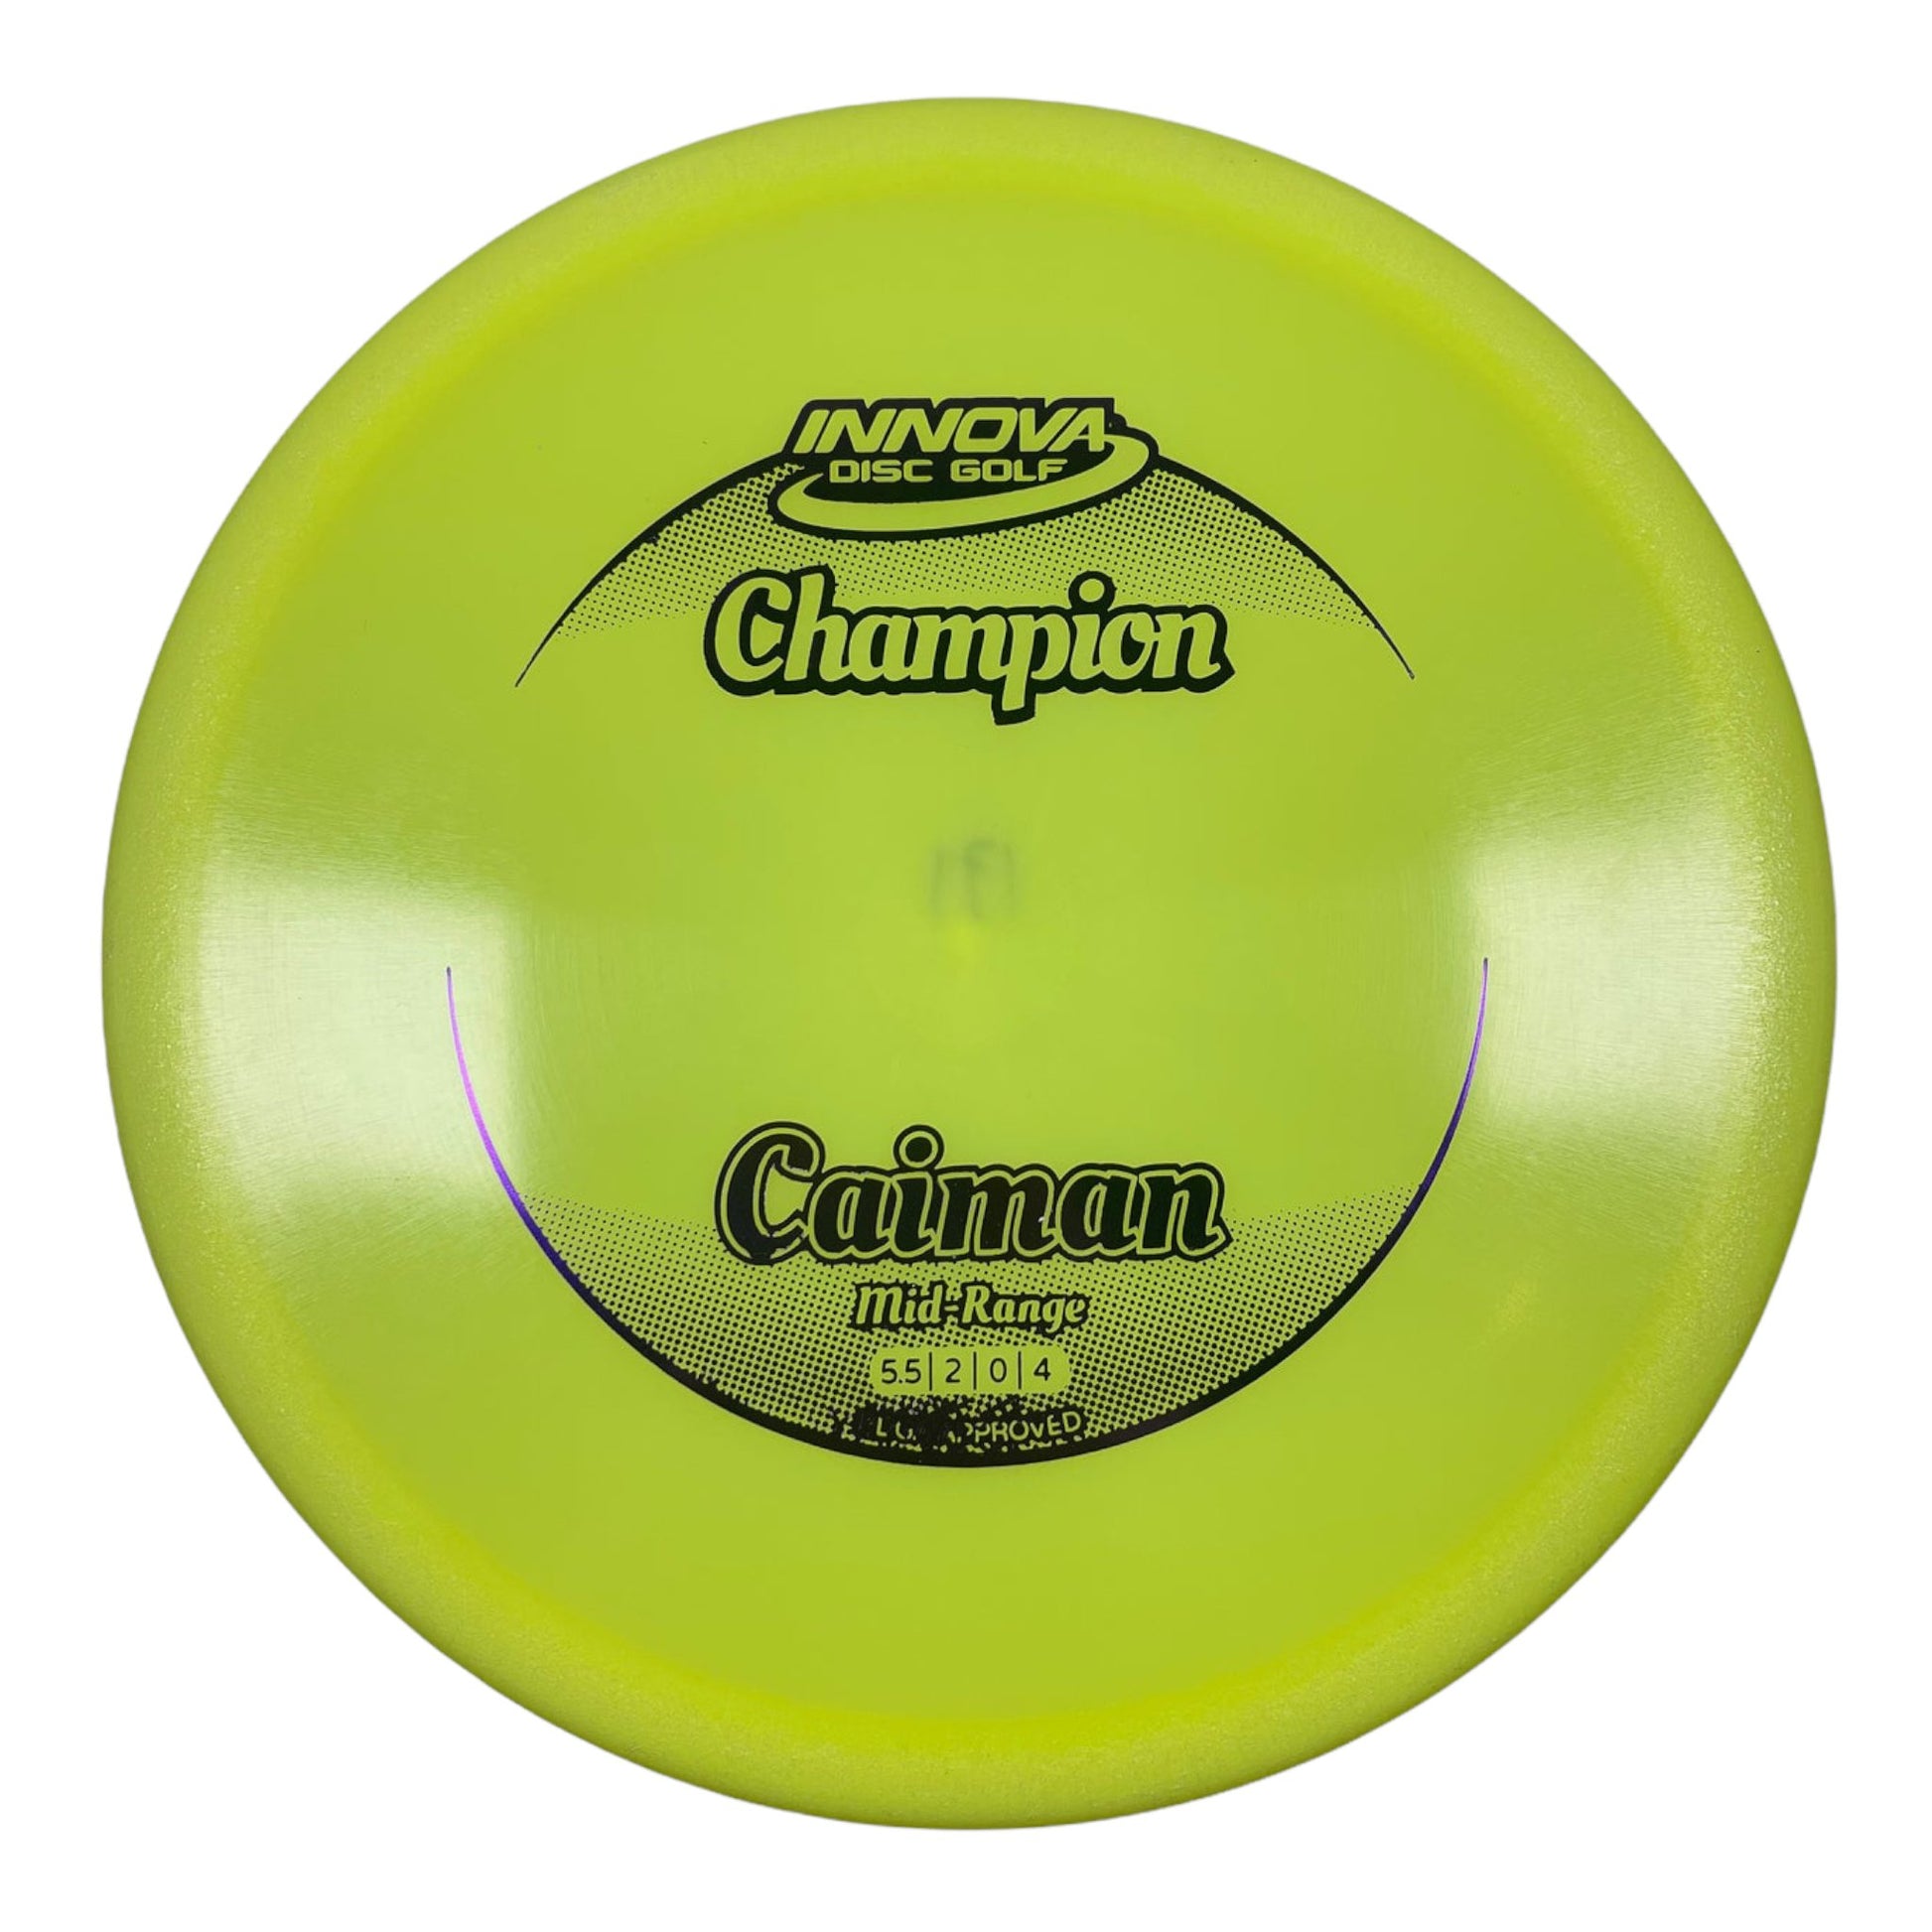 Innova Champion Discs Caiman | Champion | Yellow/Purple 171g Disc Golf